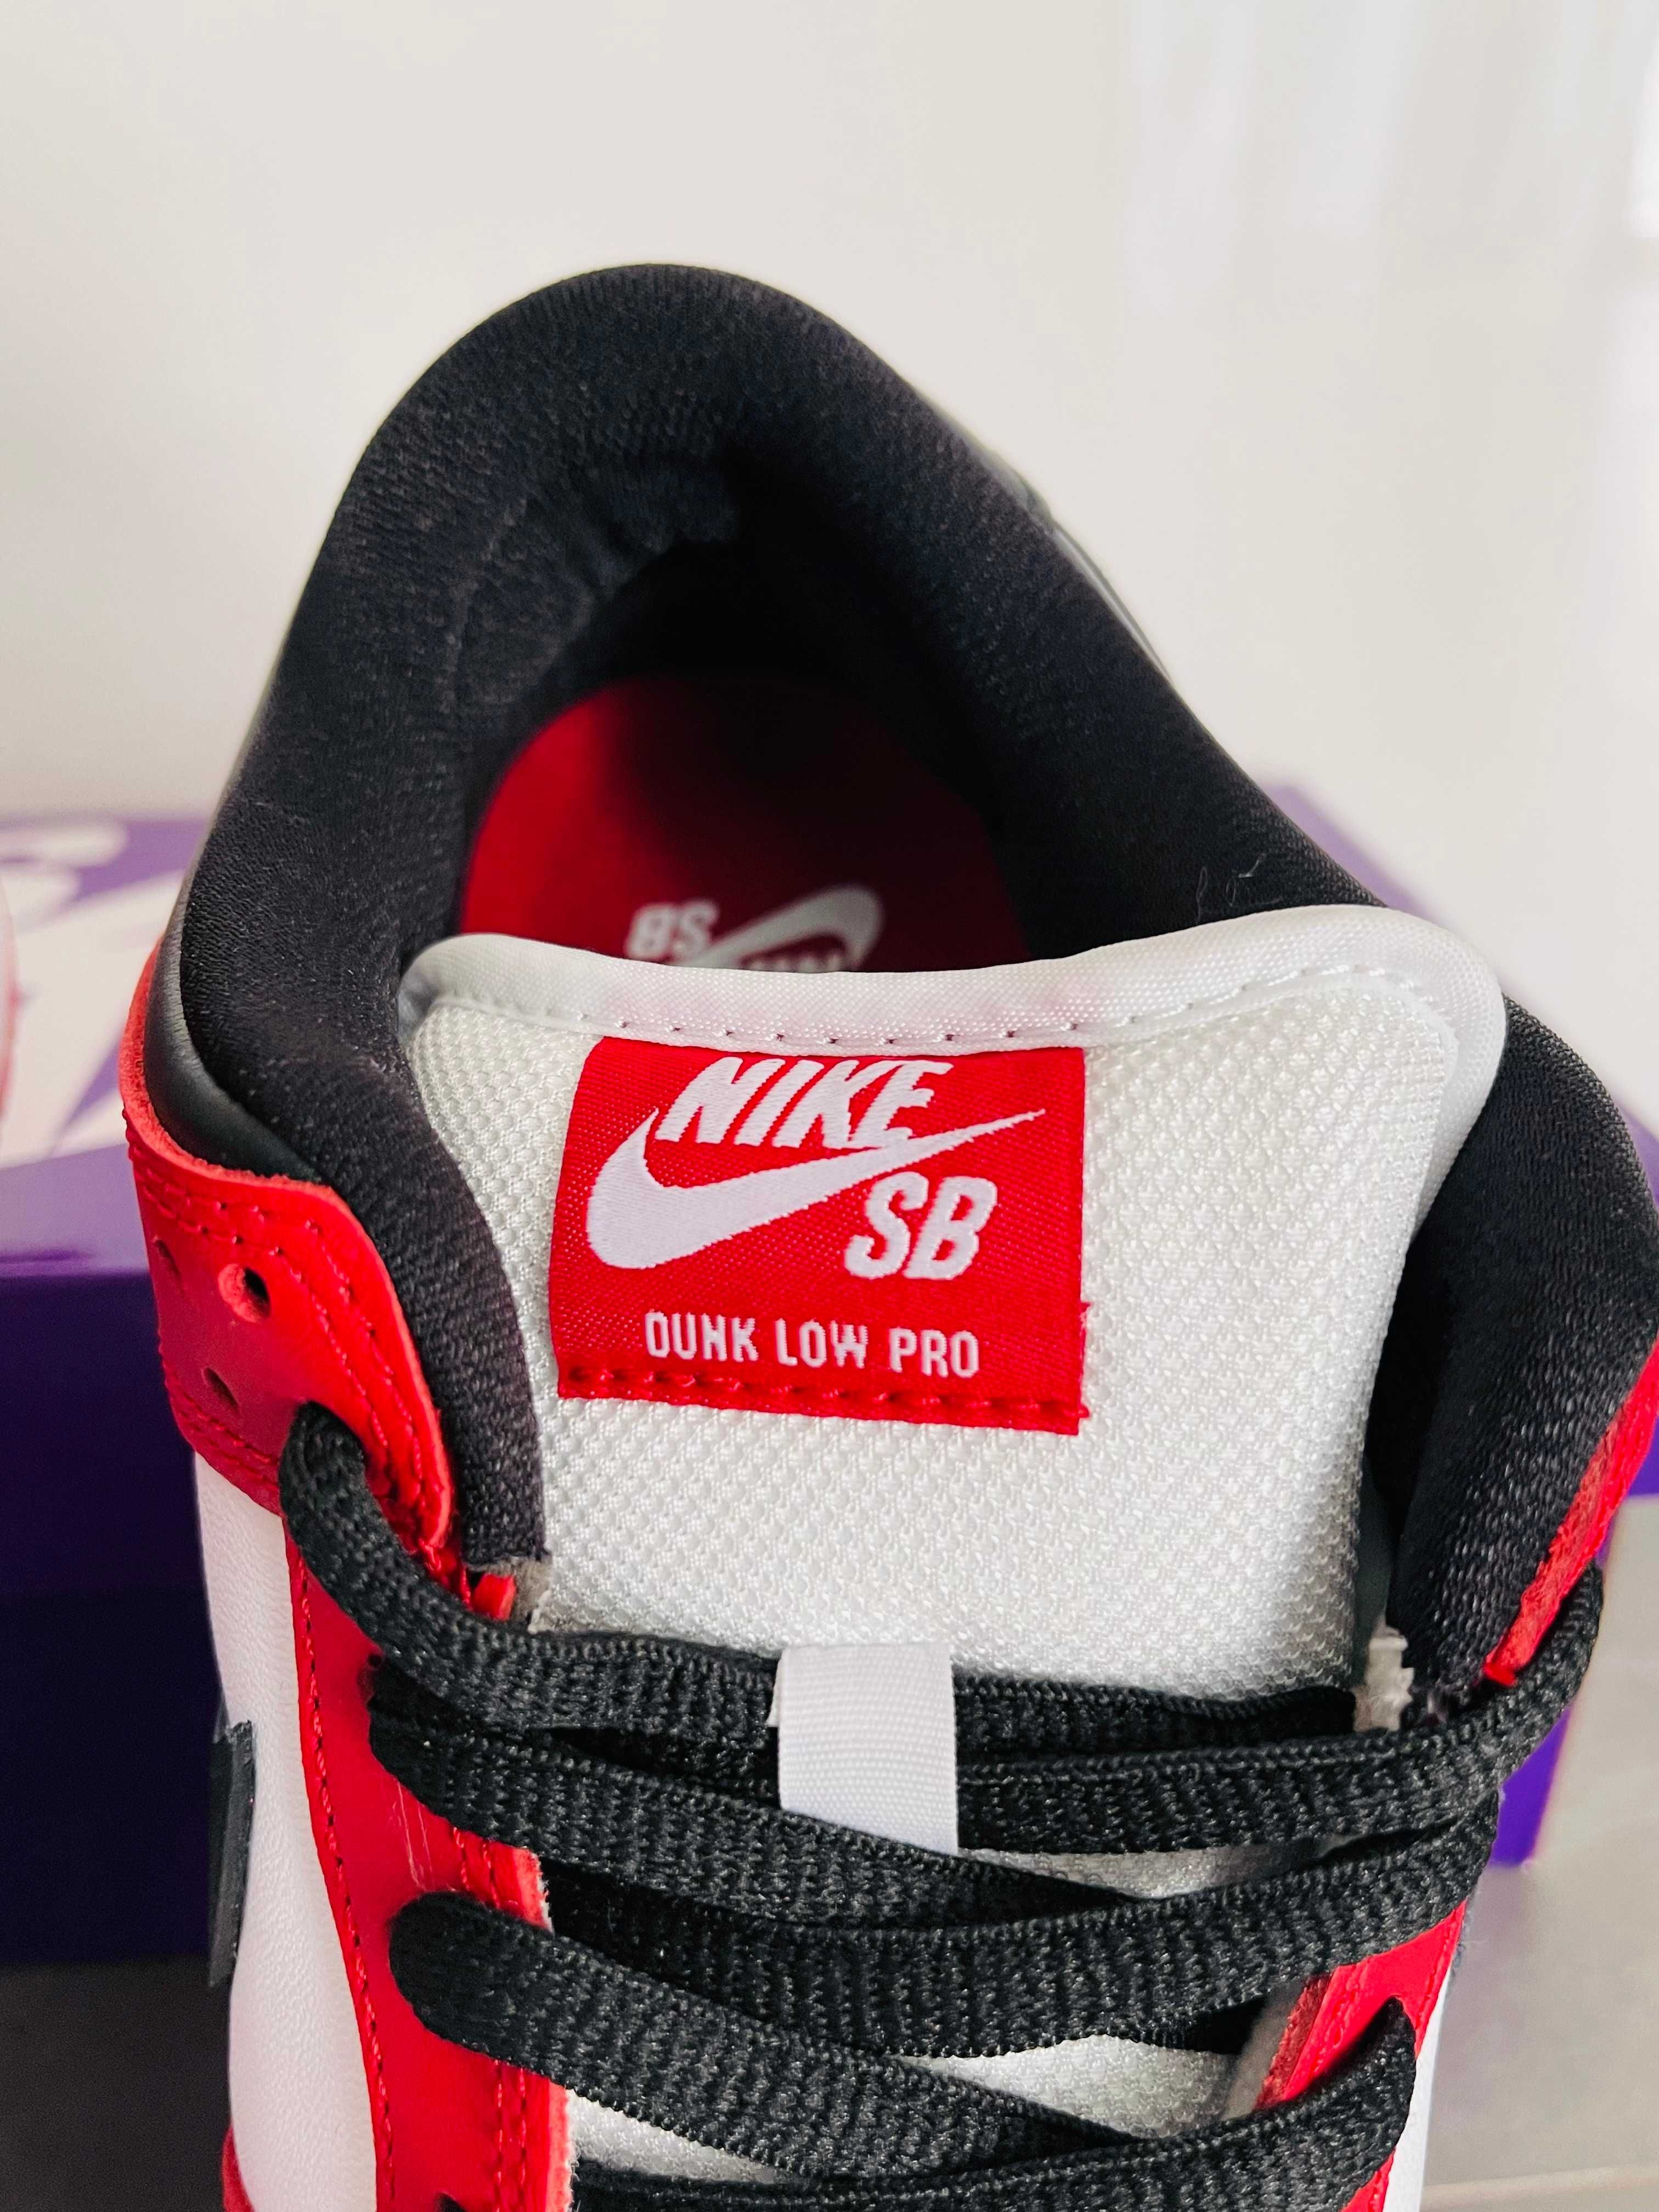 Nike Dunk SB Pro Chicago Jordan rozmiar 40 25cm wkładka Nowe